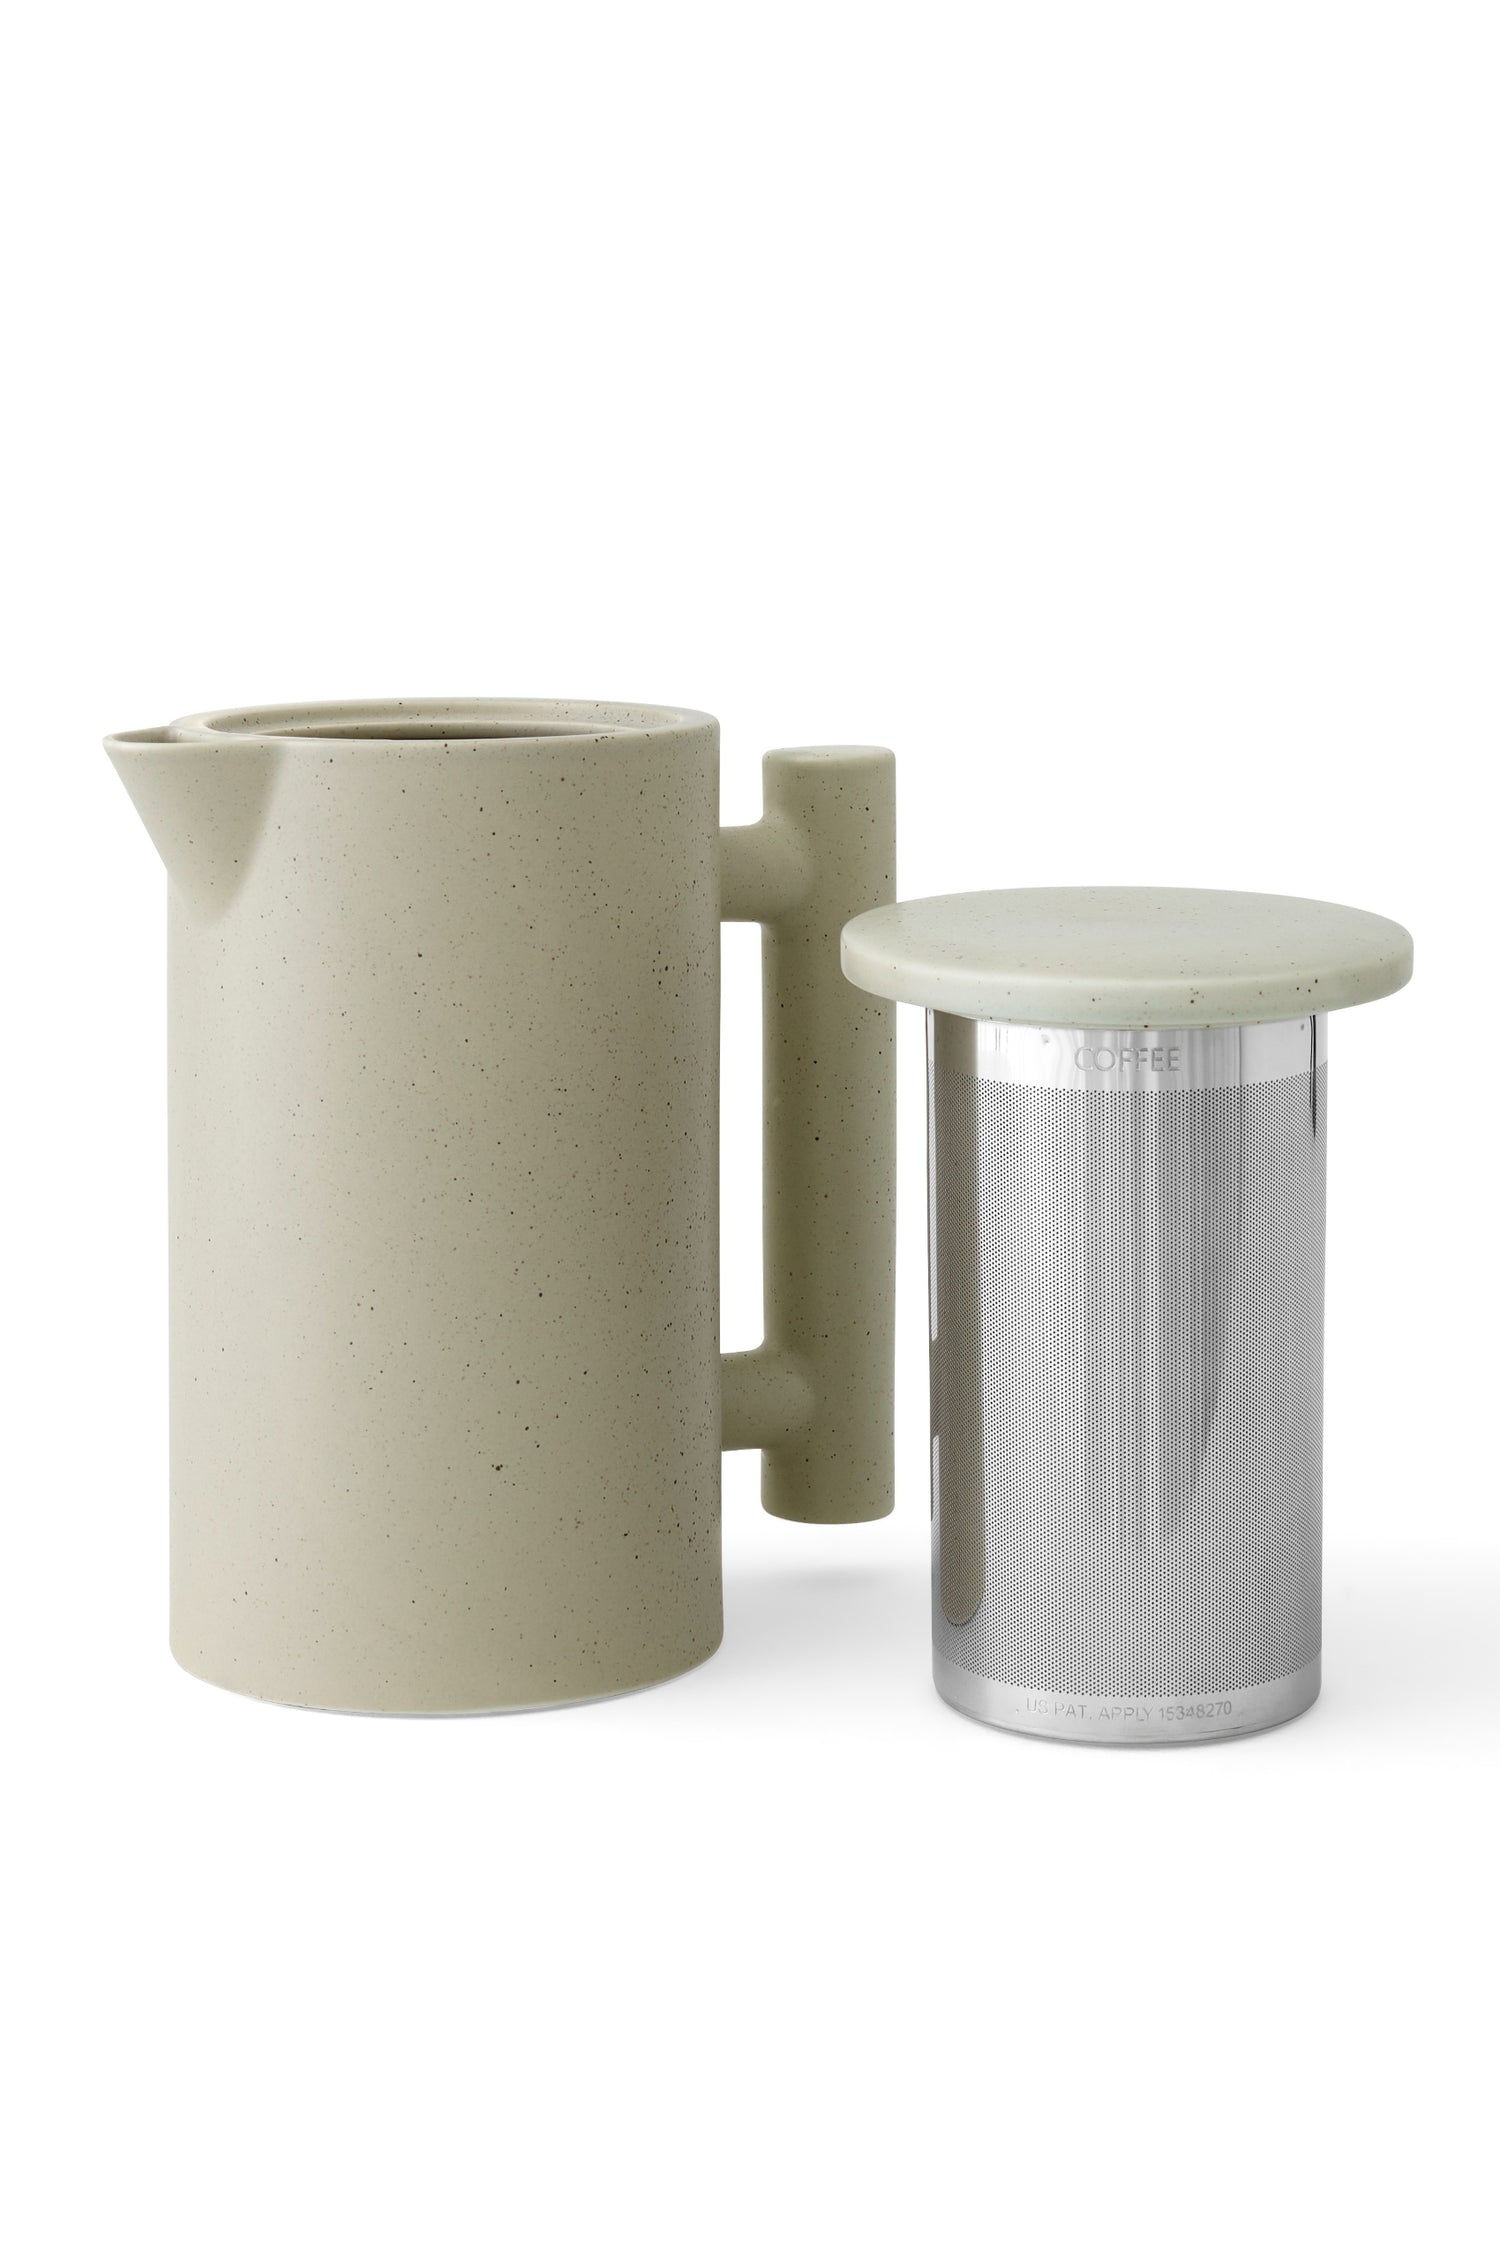 Tea coffee brewing pot ceramic speckled grey minimal look stainless steel filter